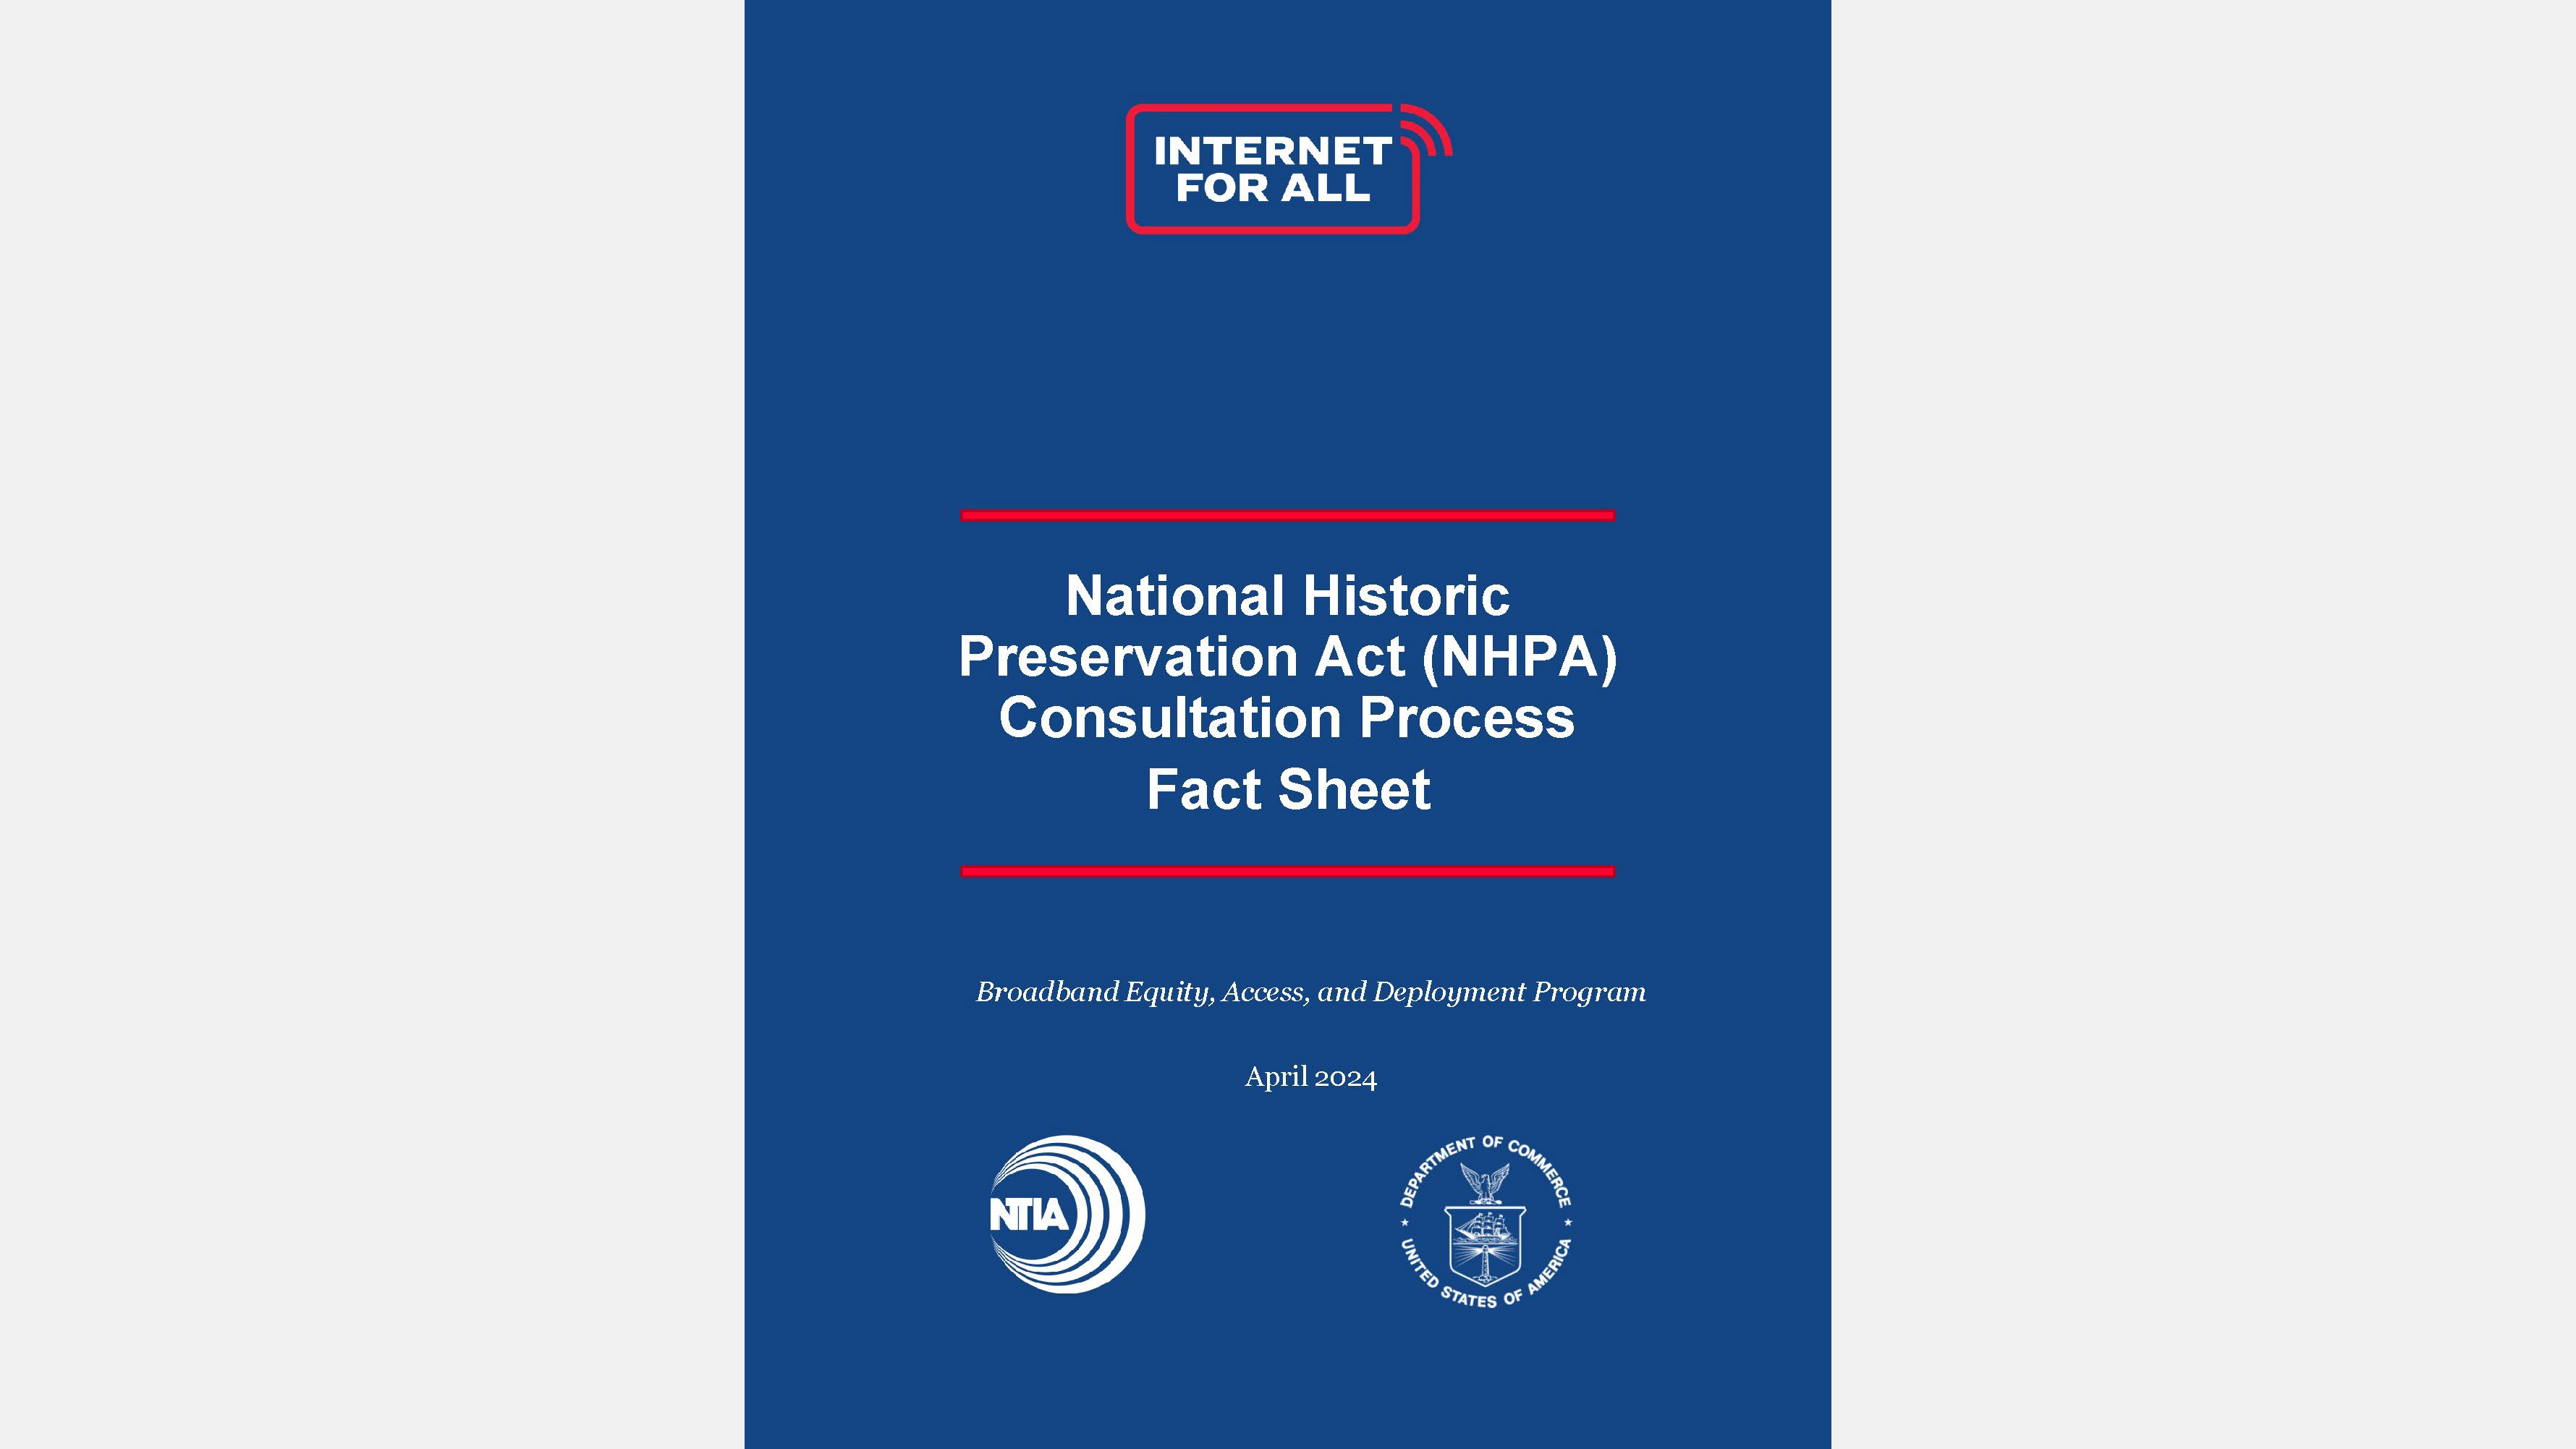 NHPA Consultation Process Fact Sheet